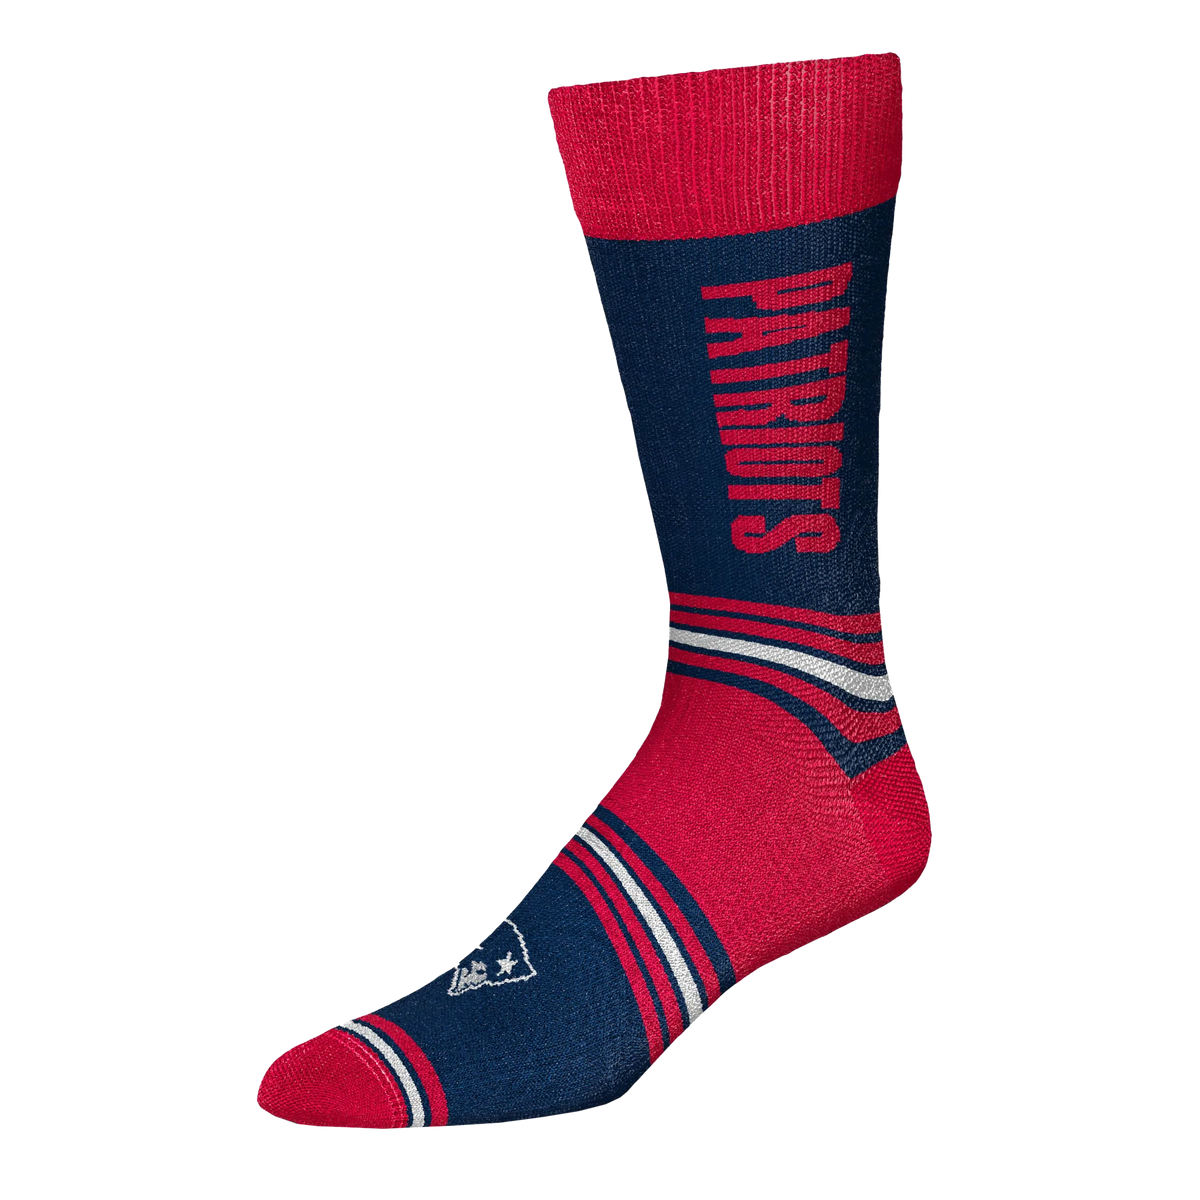 New England Patriots - Go Team! Socks